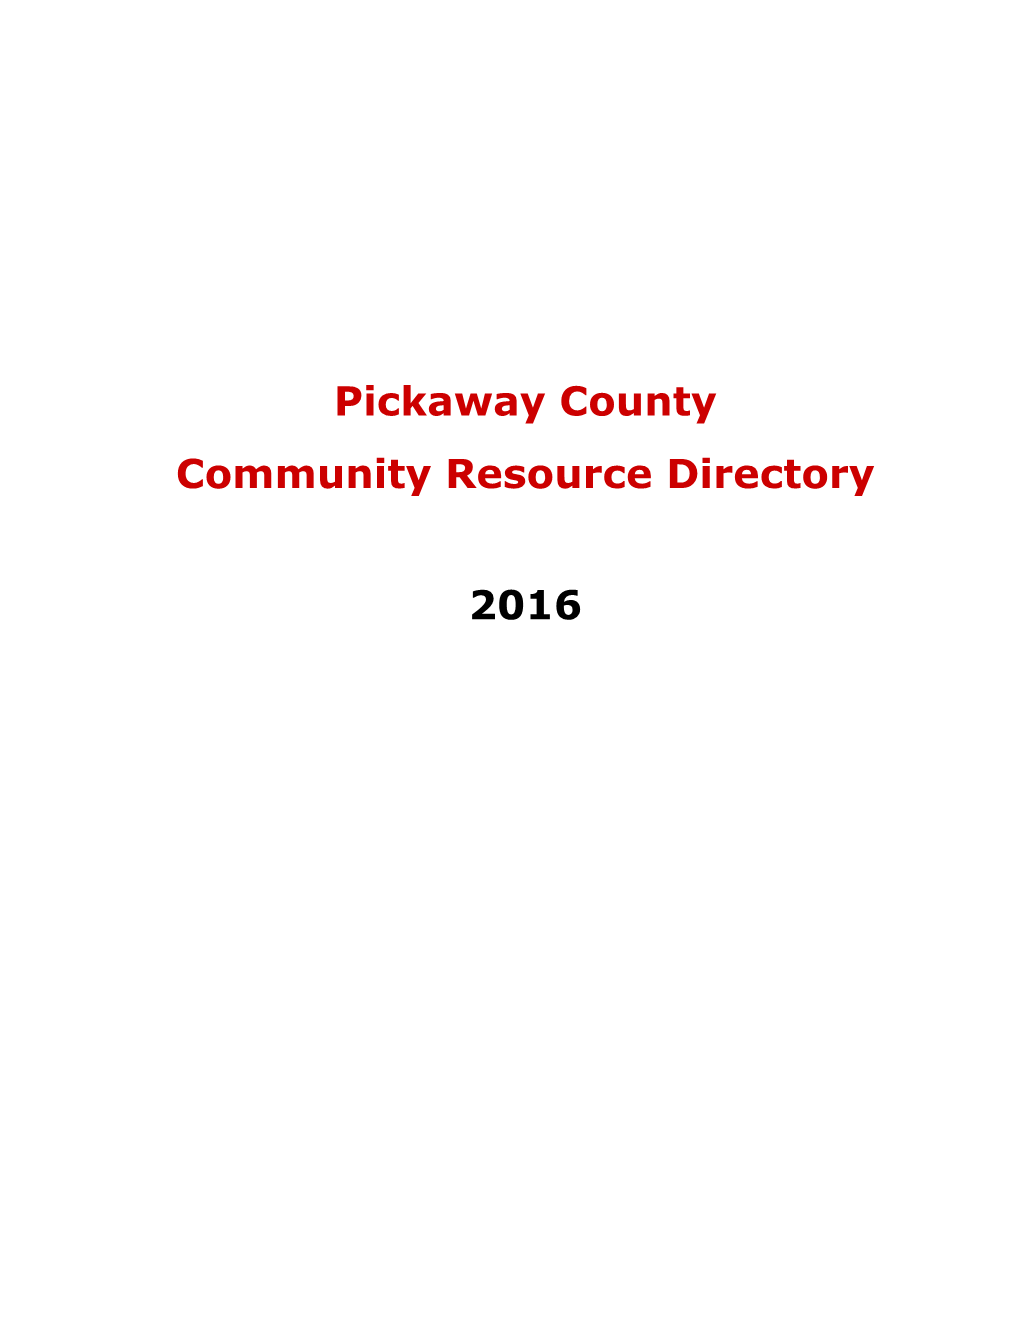 Pickaway County Community Resource Directory 2016